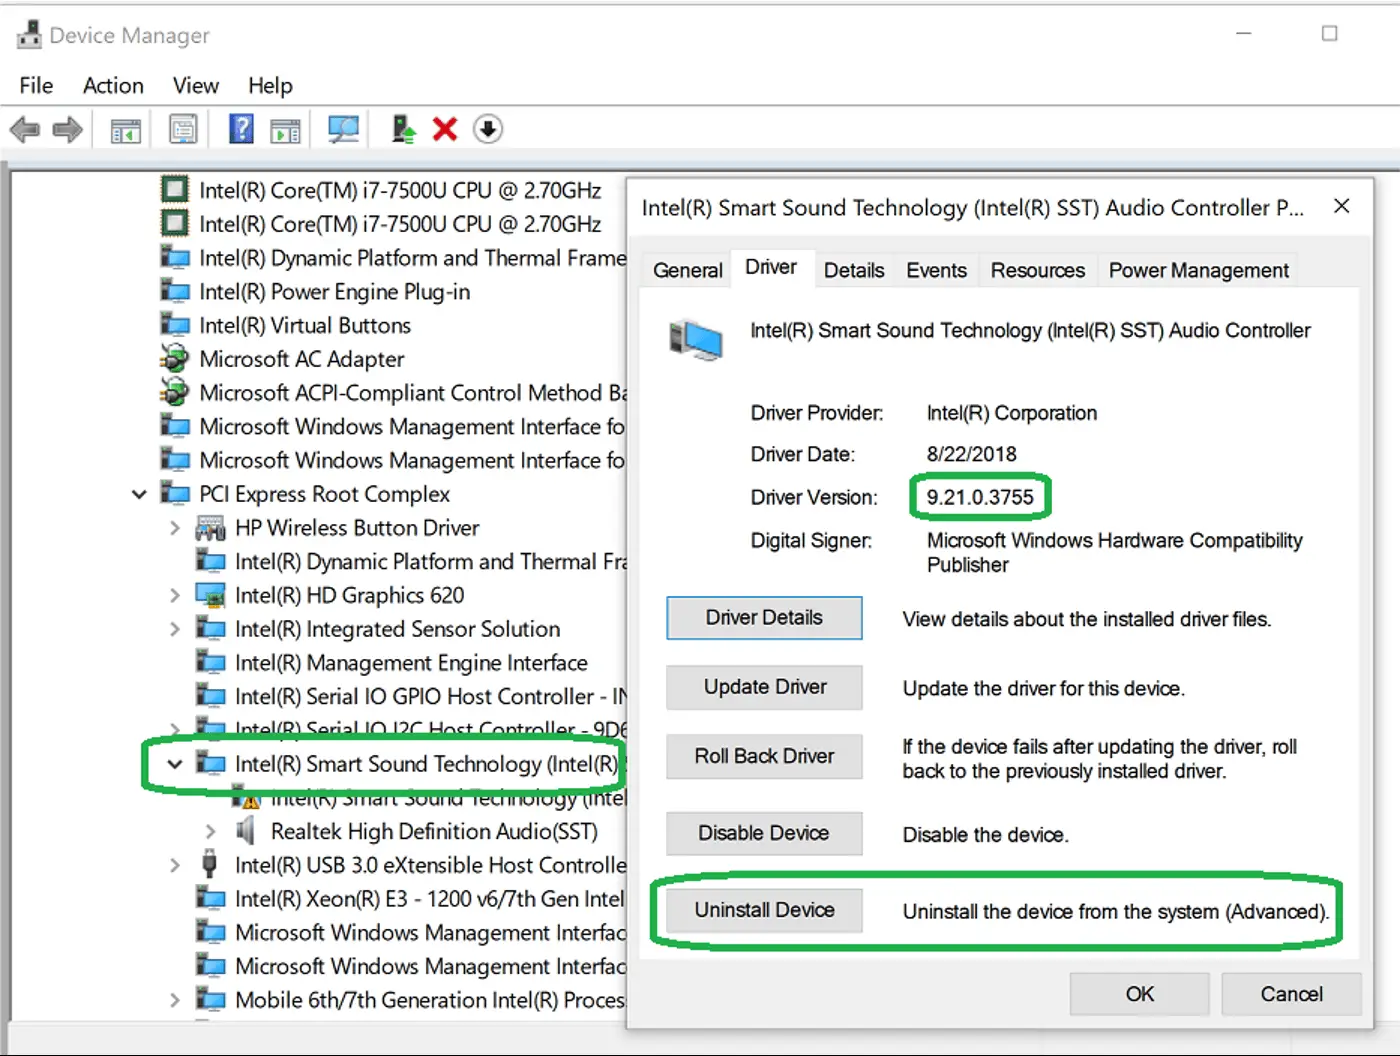 Intel SSL Audio Controller Windows 10 version 1809